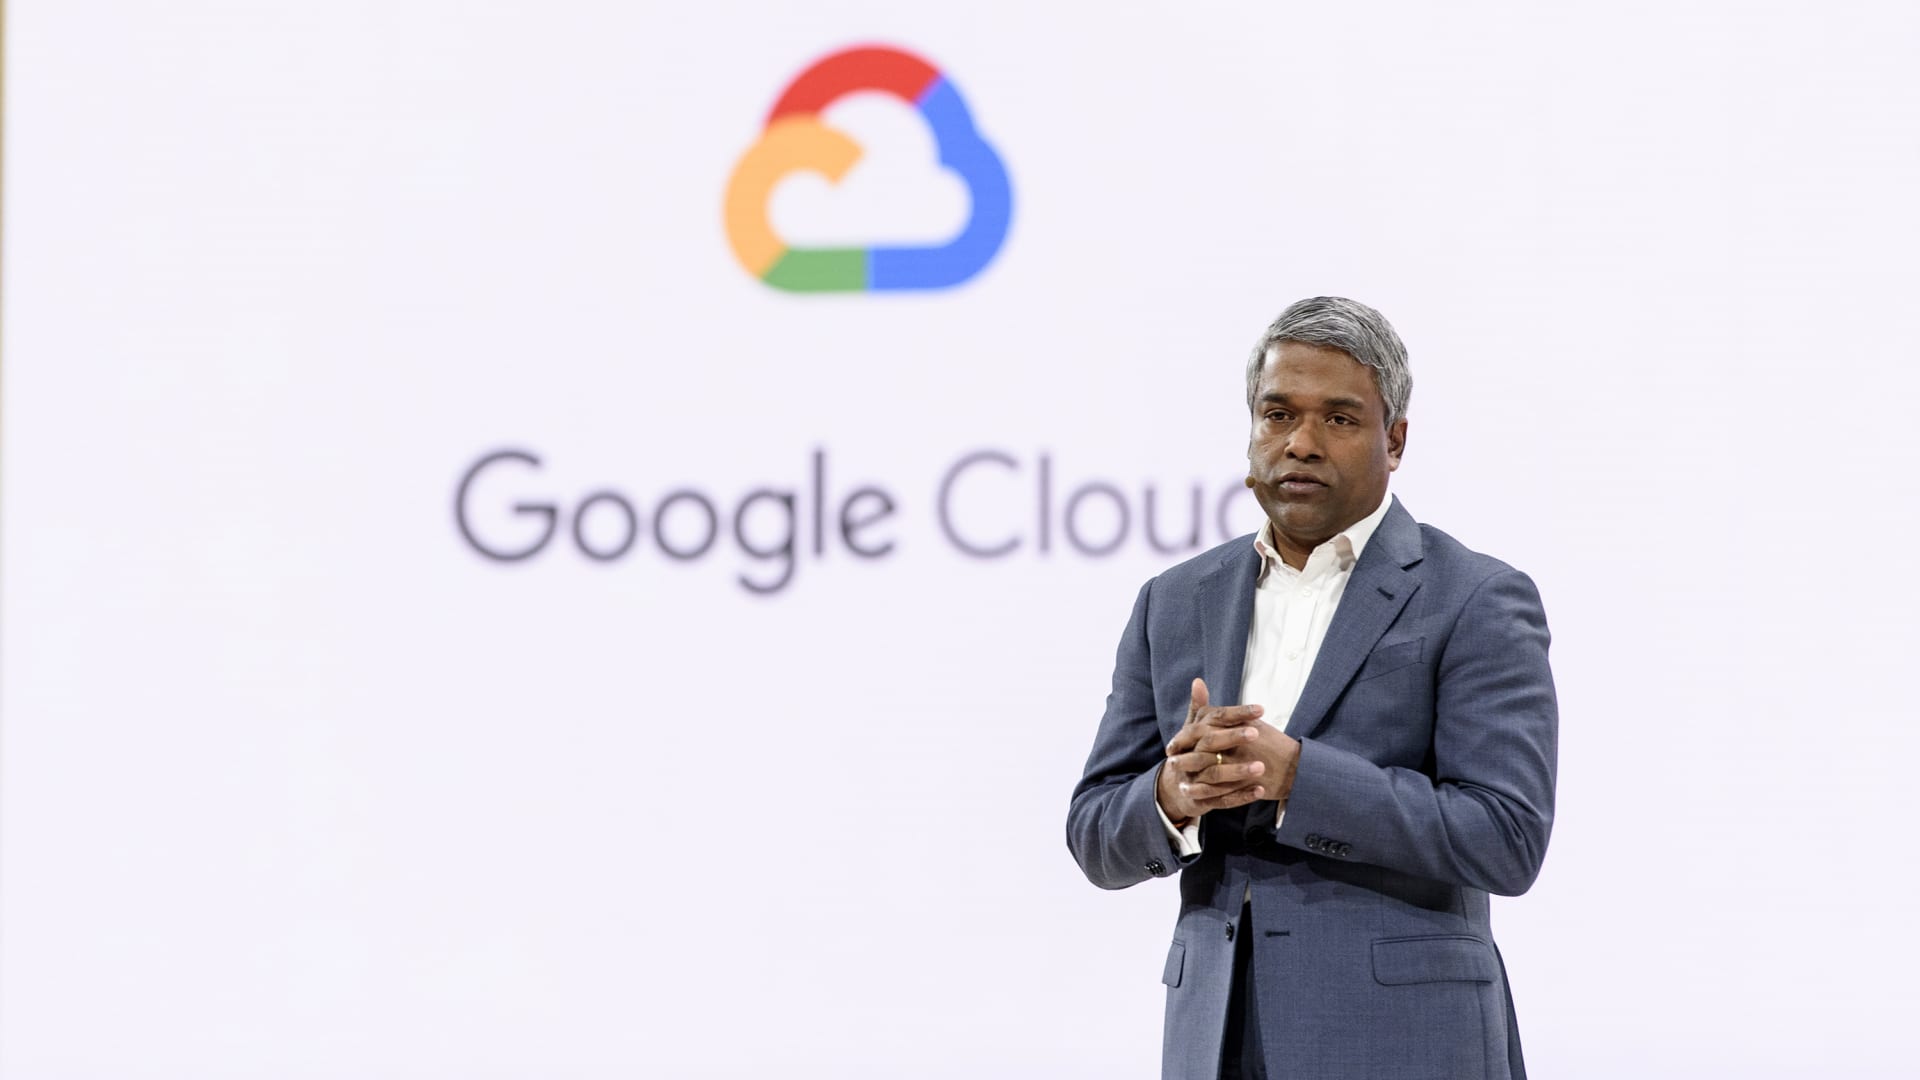 Google is having productive talks with the EU on A.I. legislation, cloud boss says